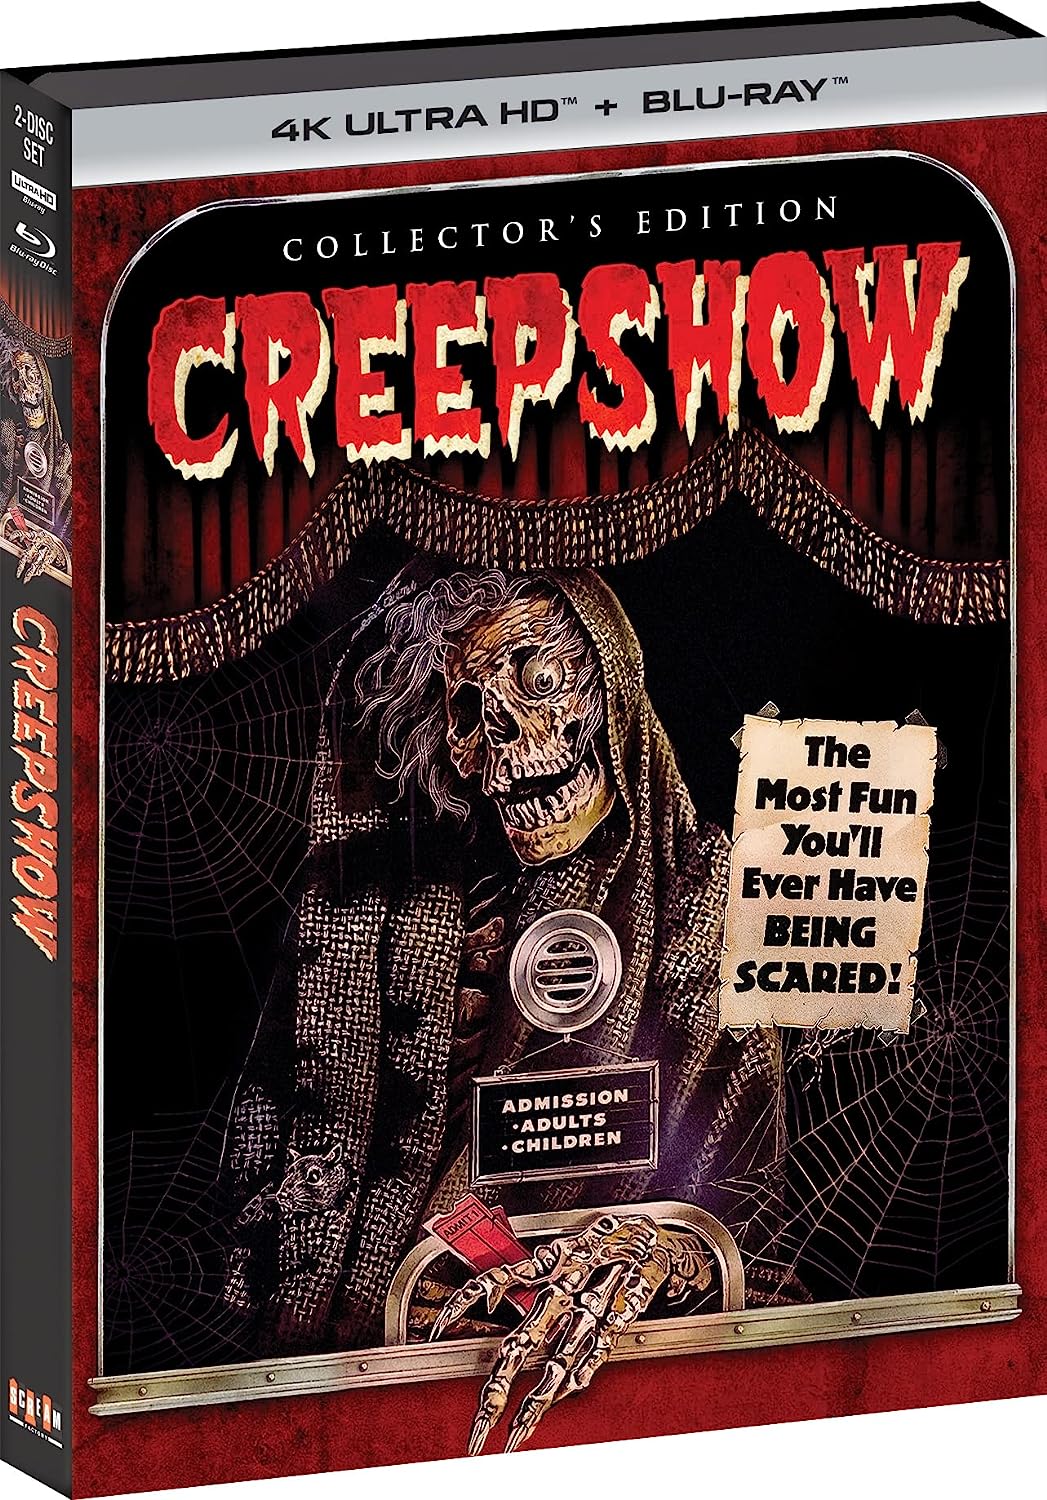 Creepshow Scream Factory 4K UHD/Blu-Ray [NEW] [SLIPCOVER]